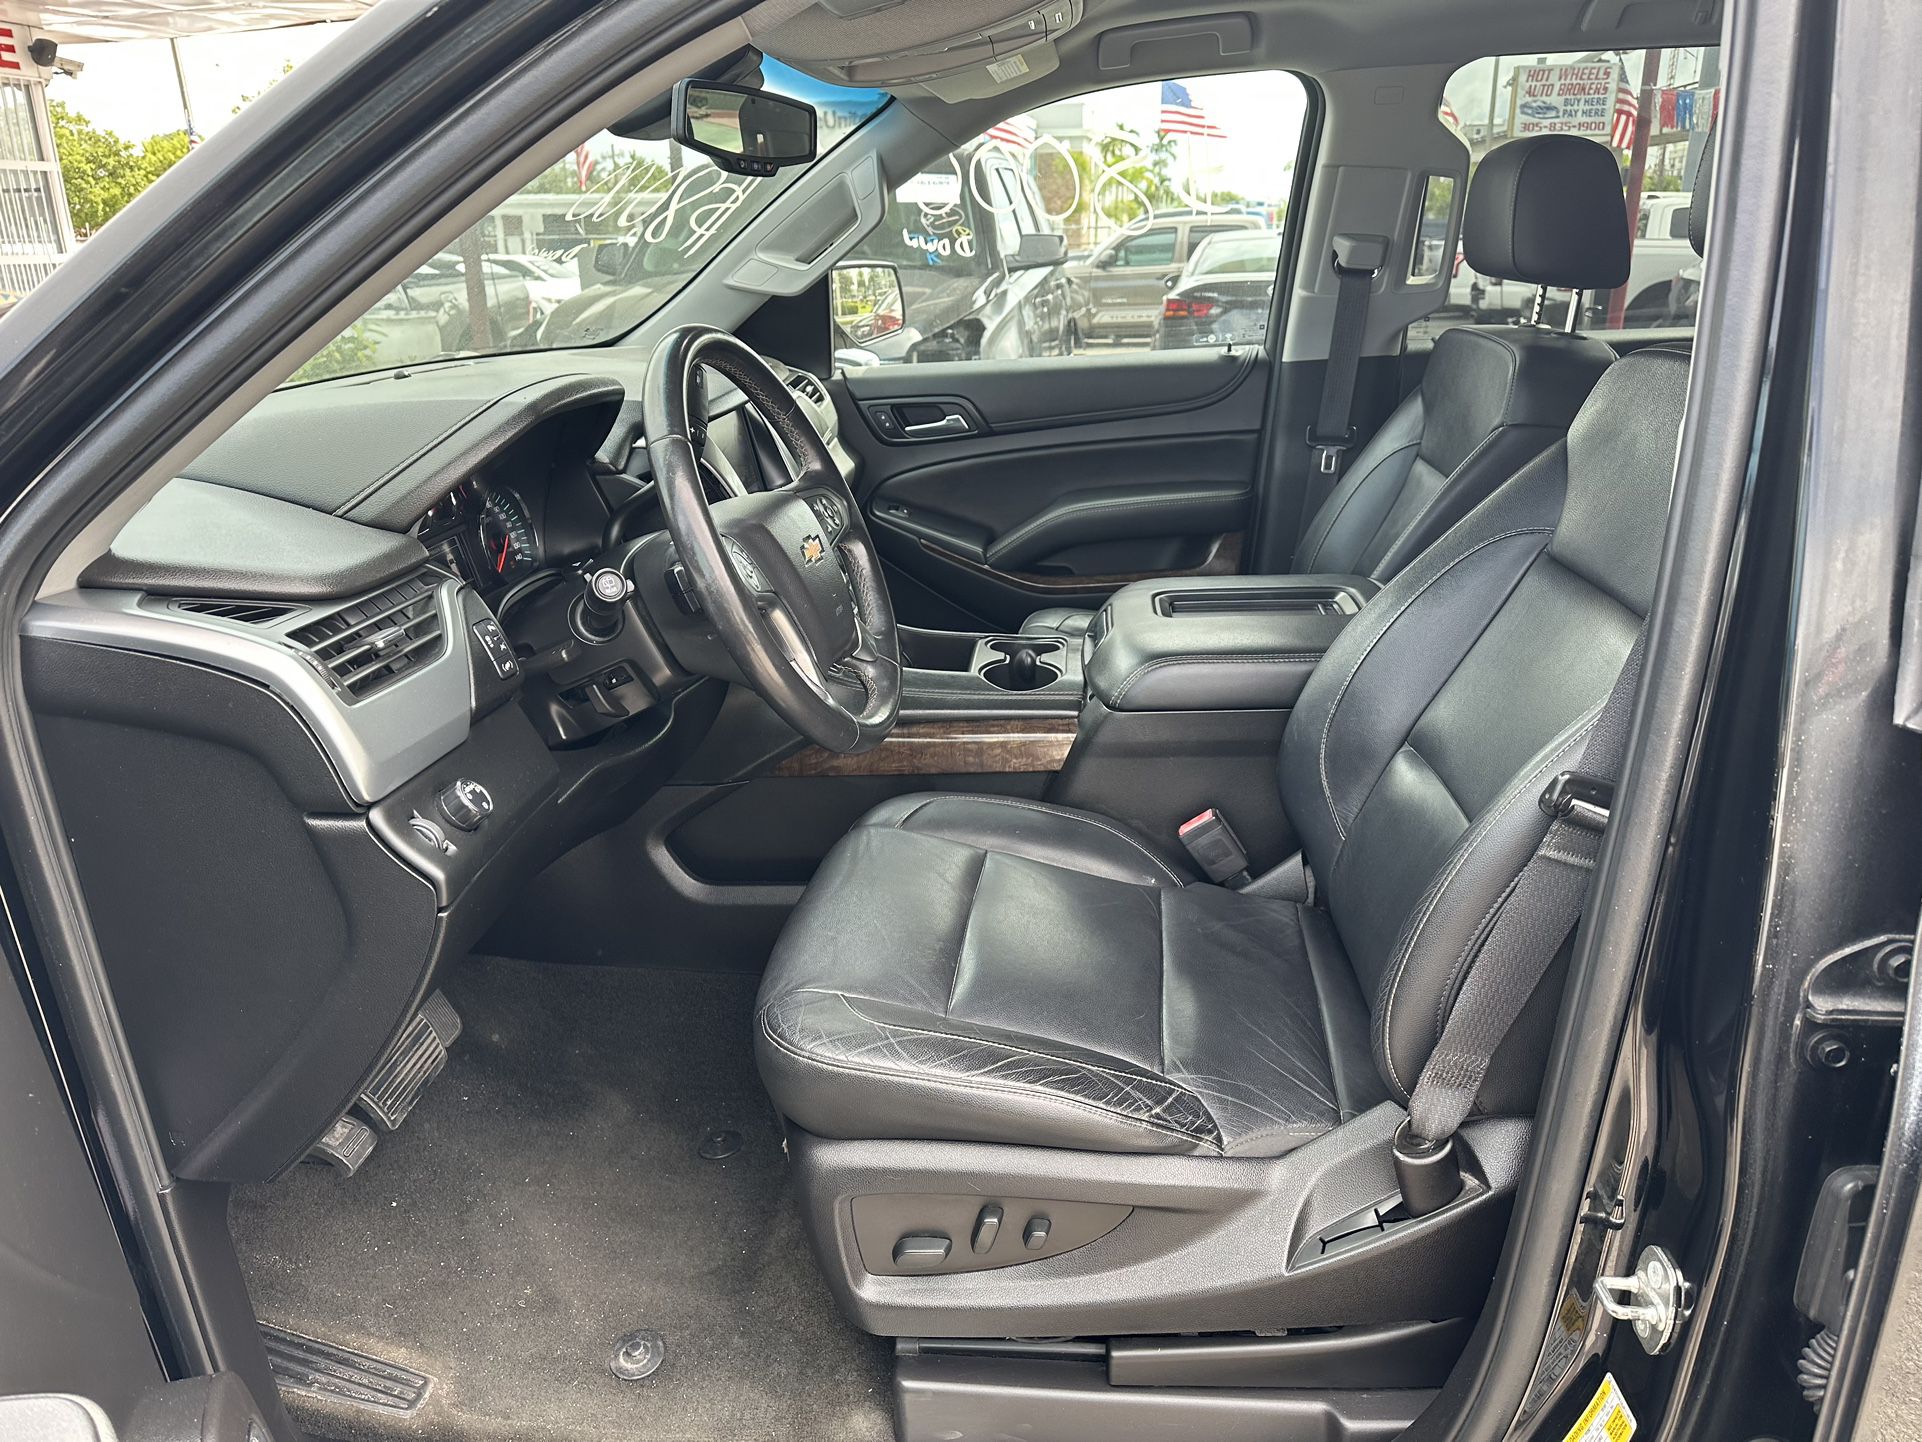 used 2018 Chevy Suburban Black - interior view 1